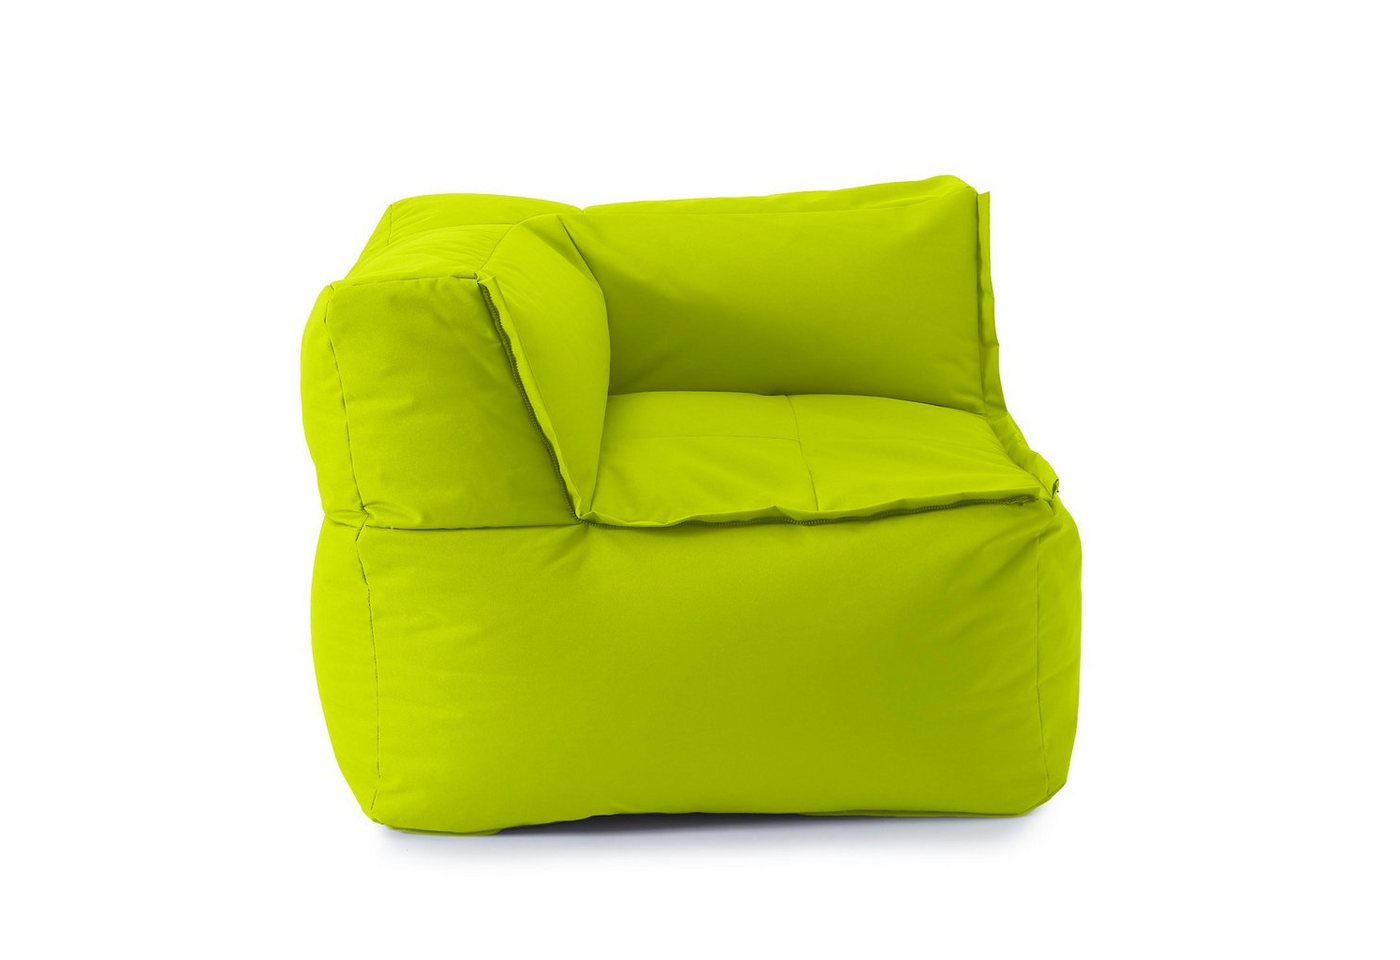 Lumaland Loungeset In- & outdoor Sofa individuell kombinierbar mit dem Modularen System, Sessel wasserfest abnehmbarer Bezug erweiterbar waschbar von Lumaland